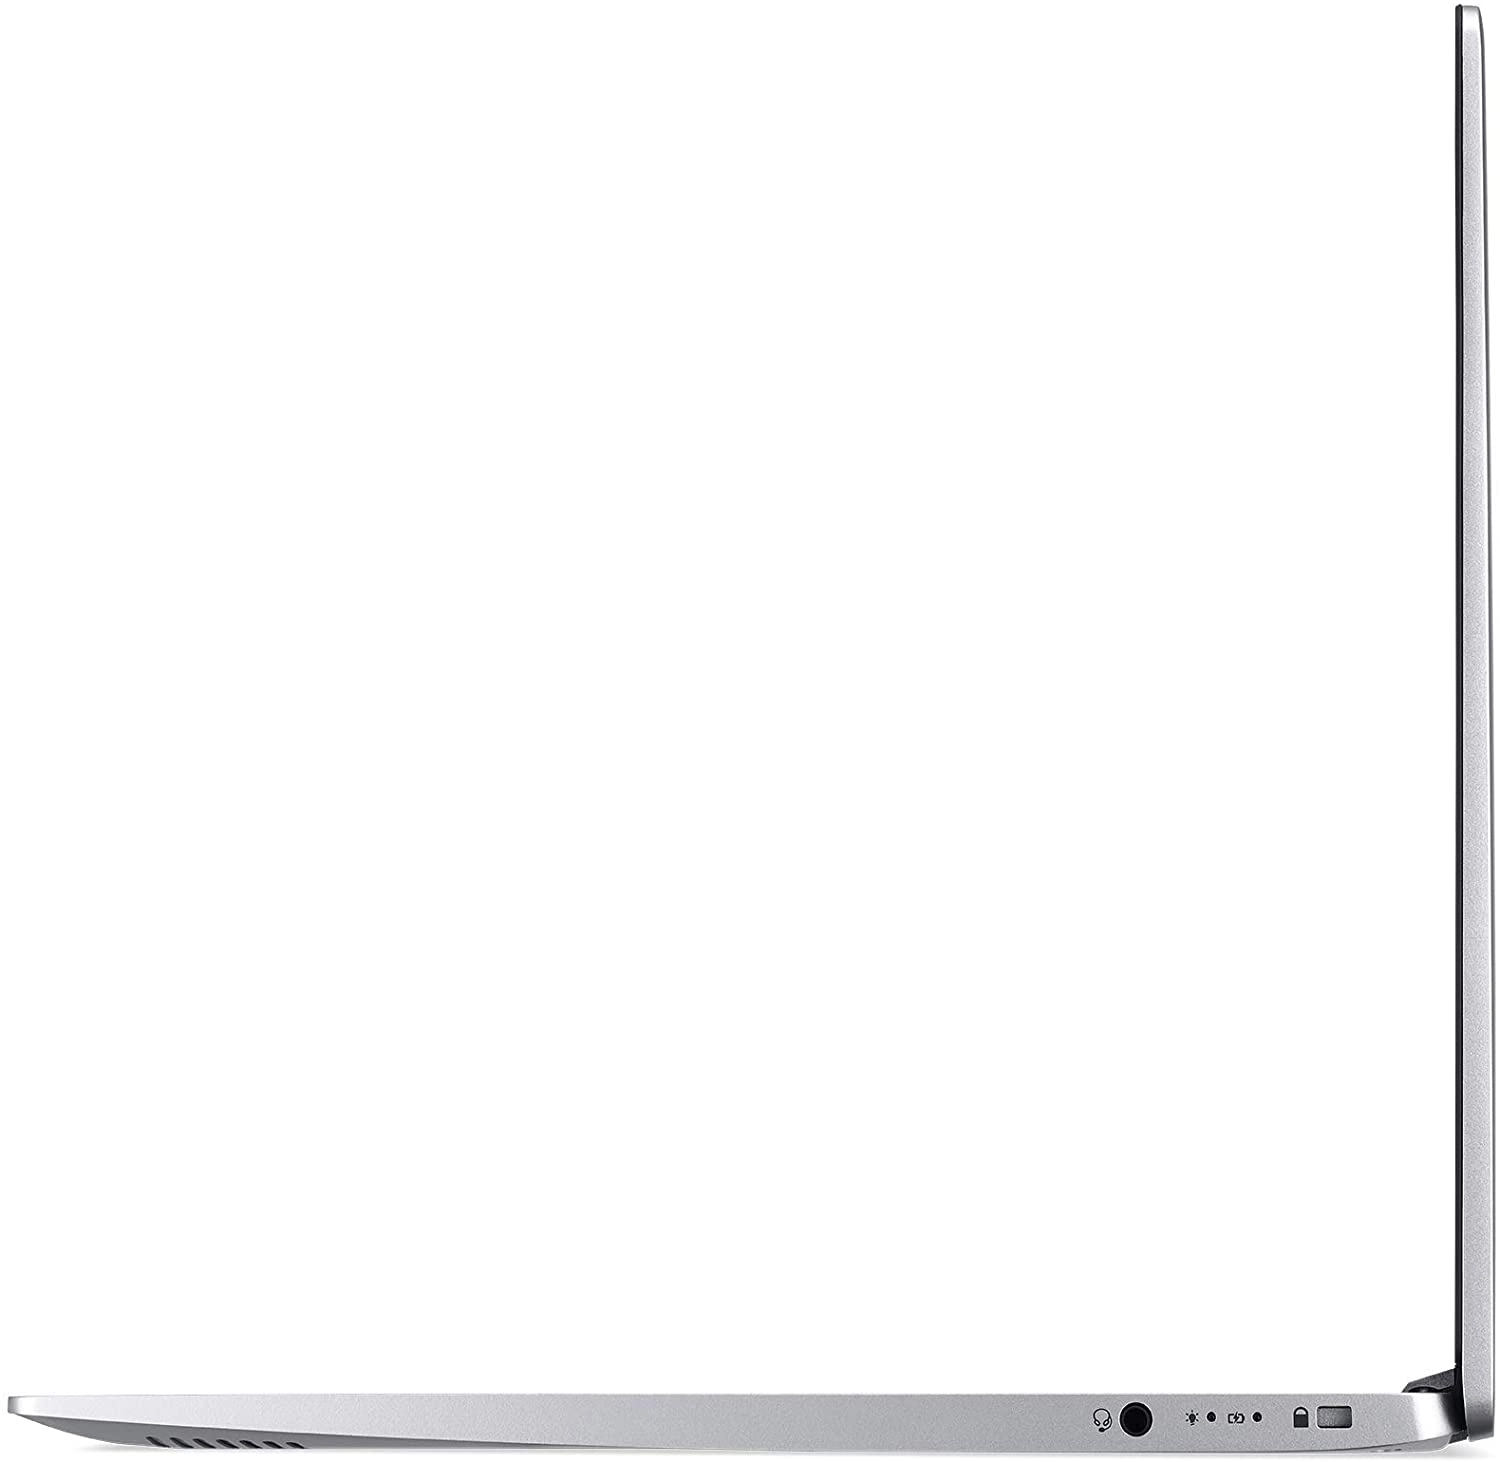 Acer SF515-51T-507P laptop image